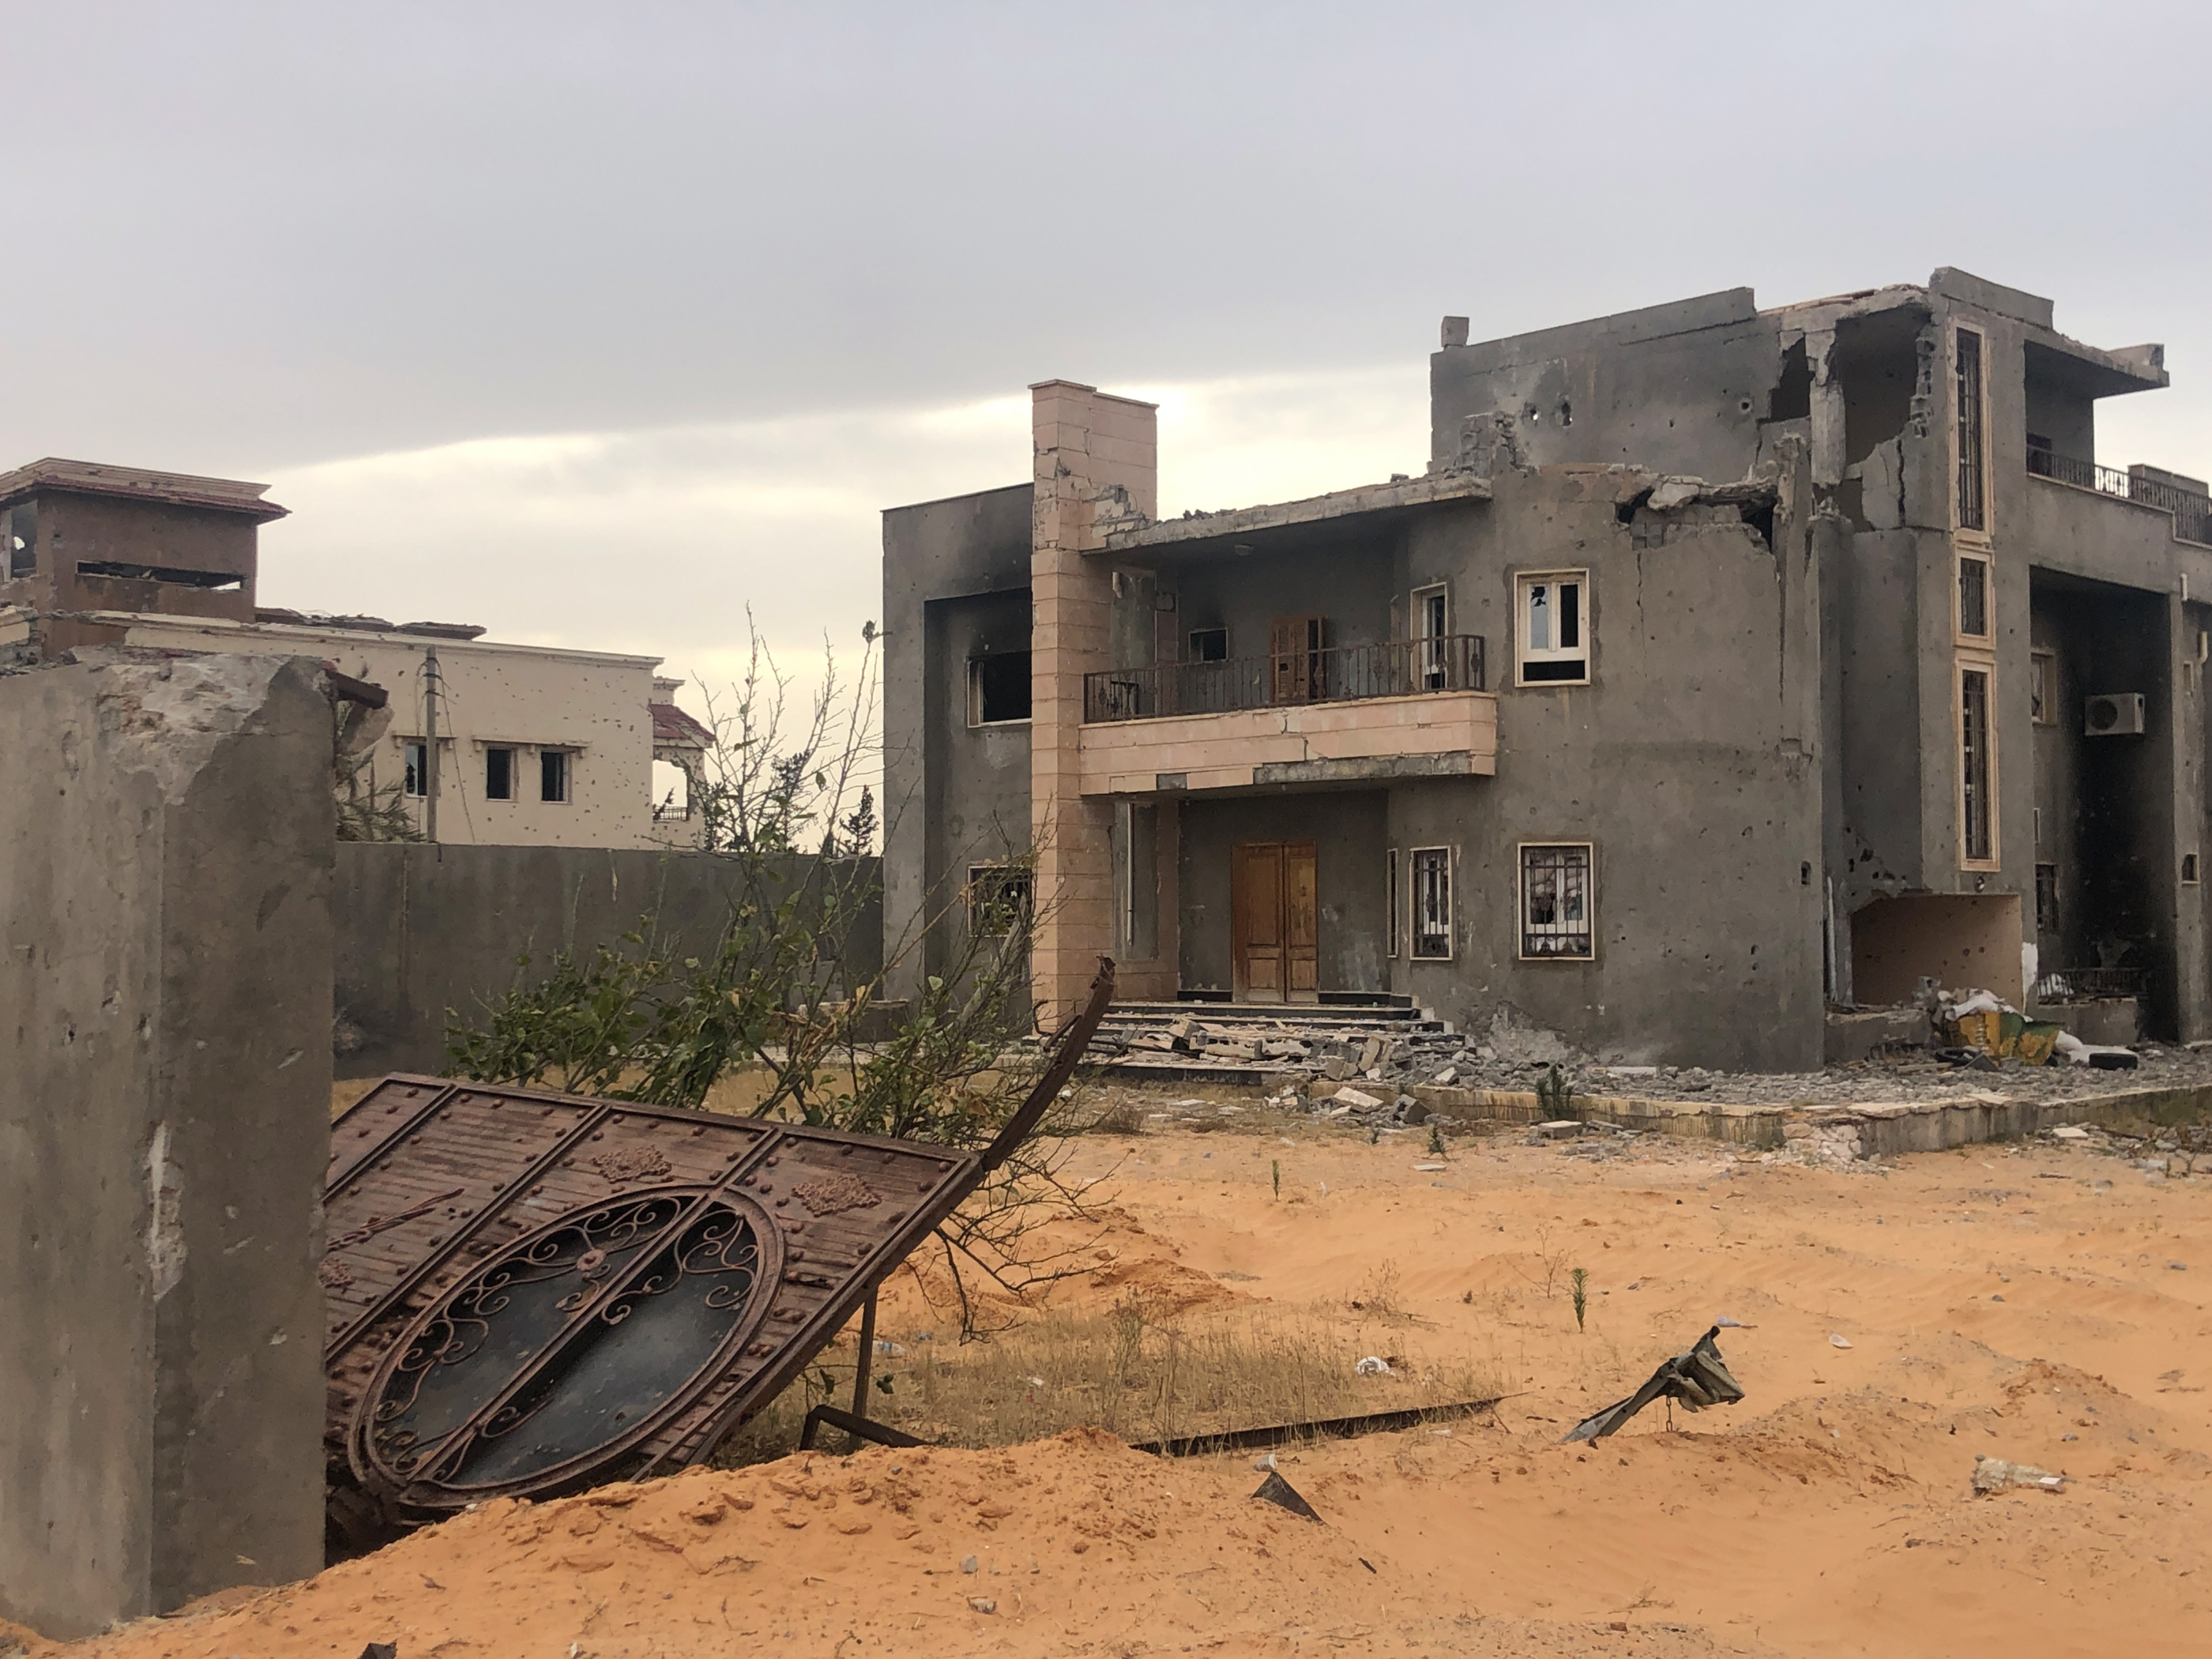 Destruction south of Tripoli, Libya